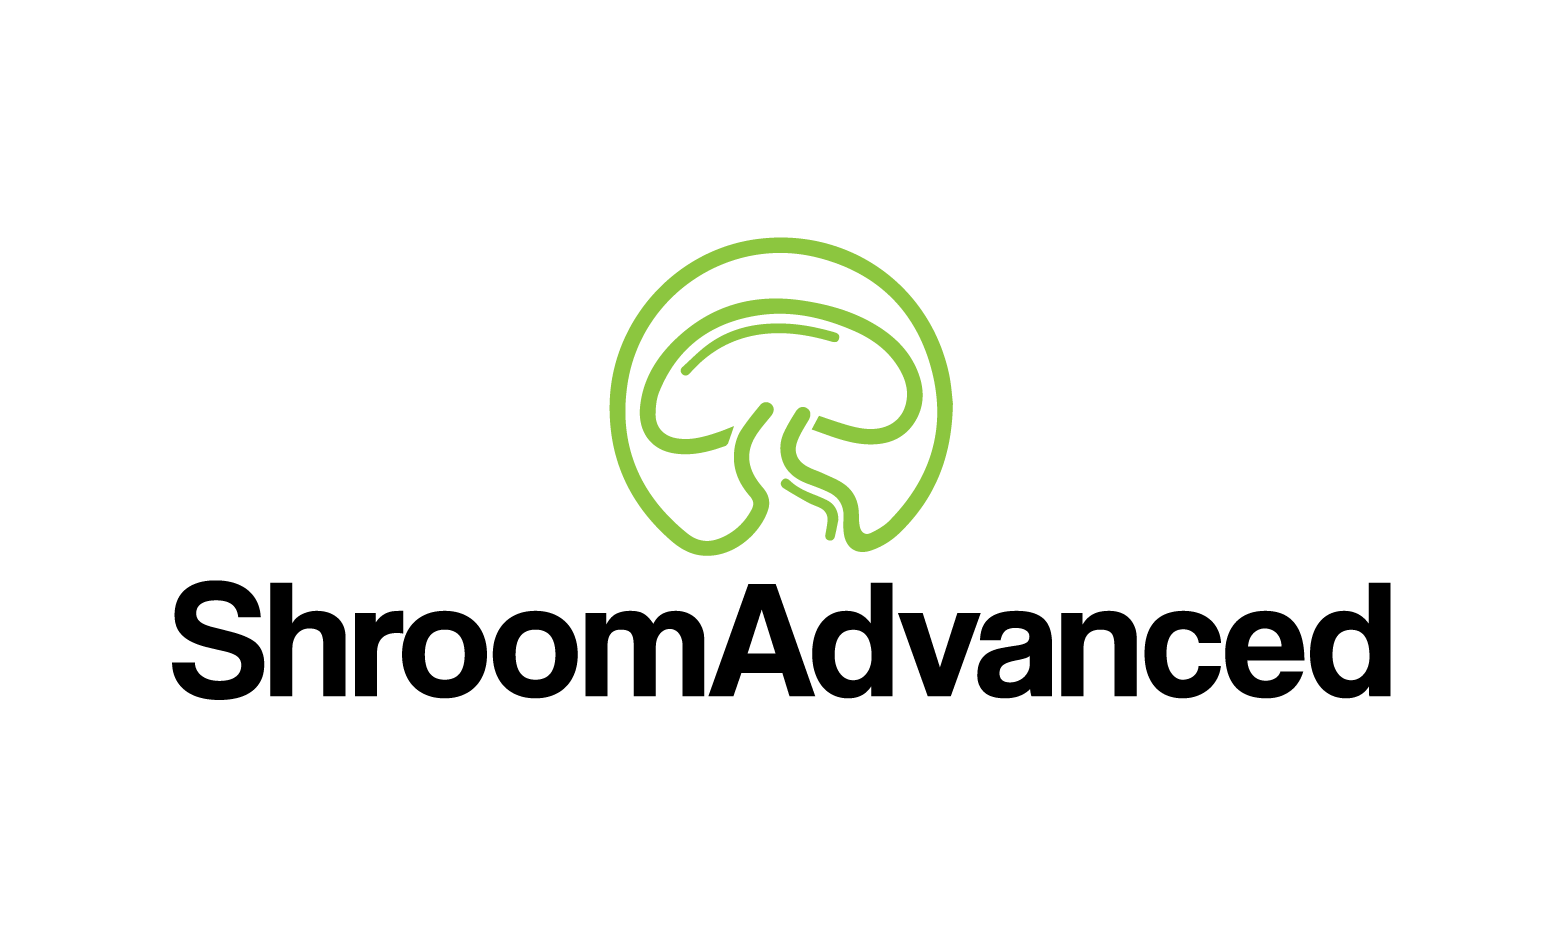 ShroomAdvanced.com - Creative brandable domain for sale